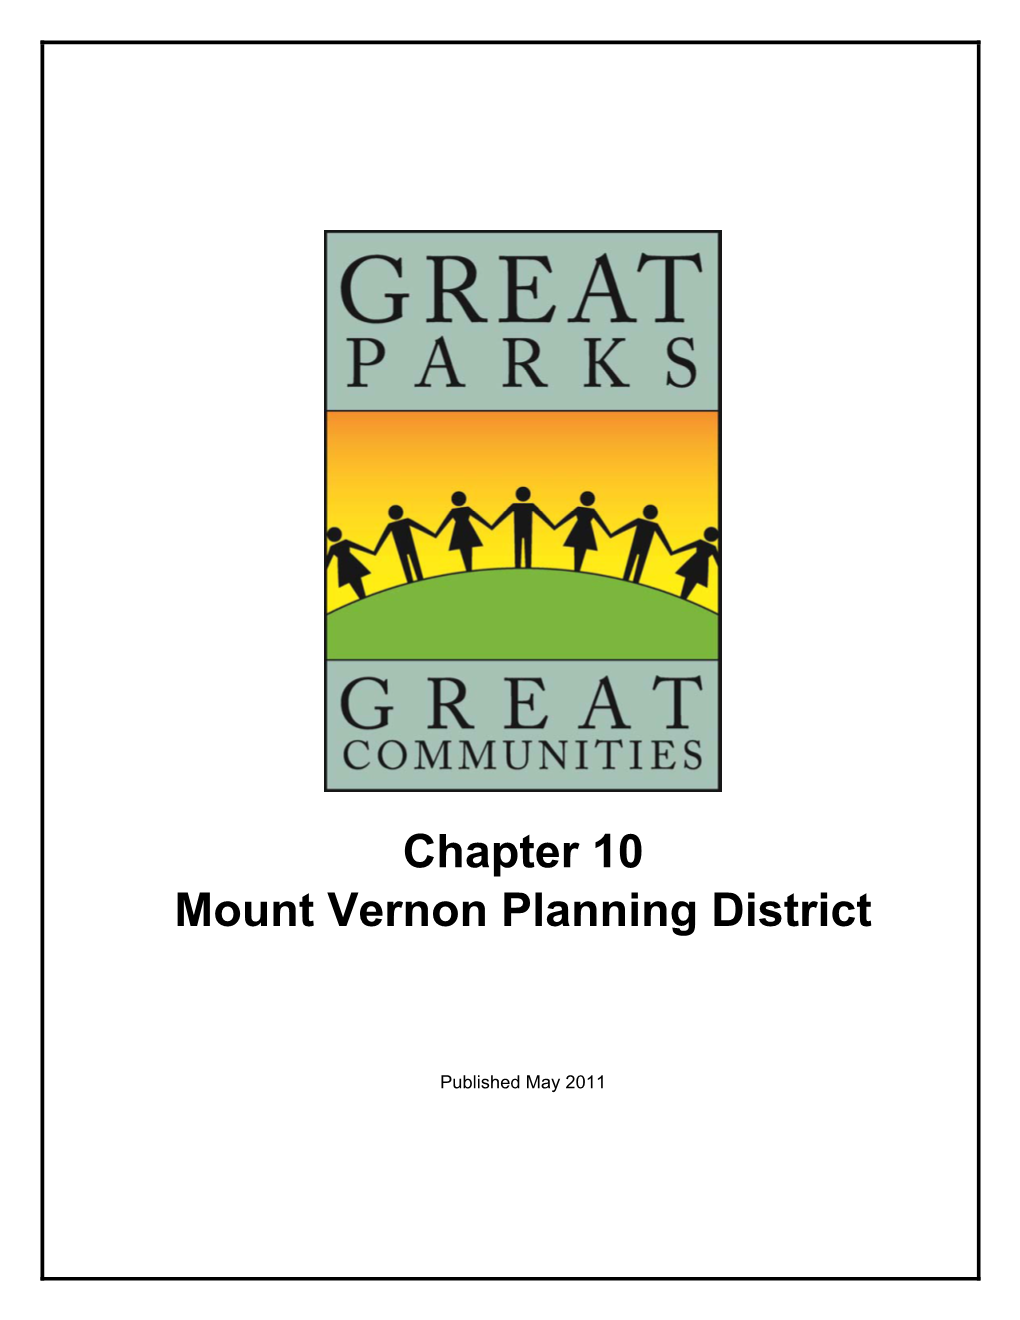 Mount Vernon Planning District